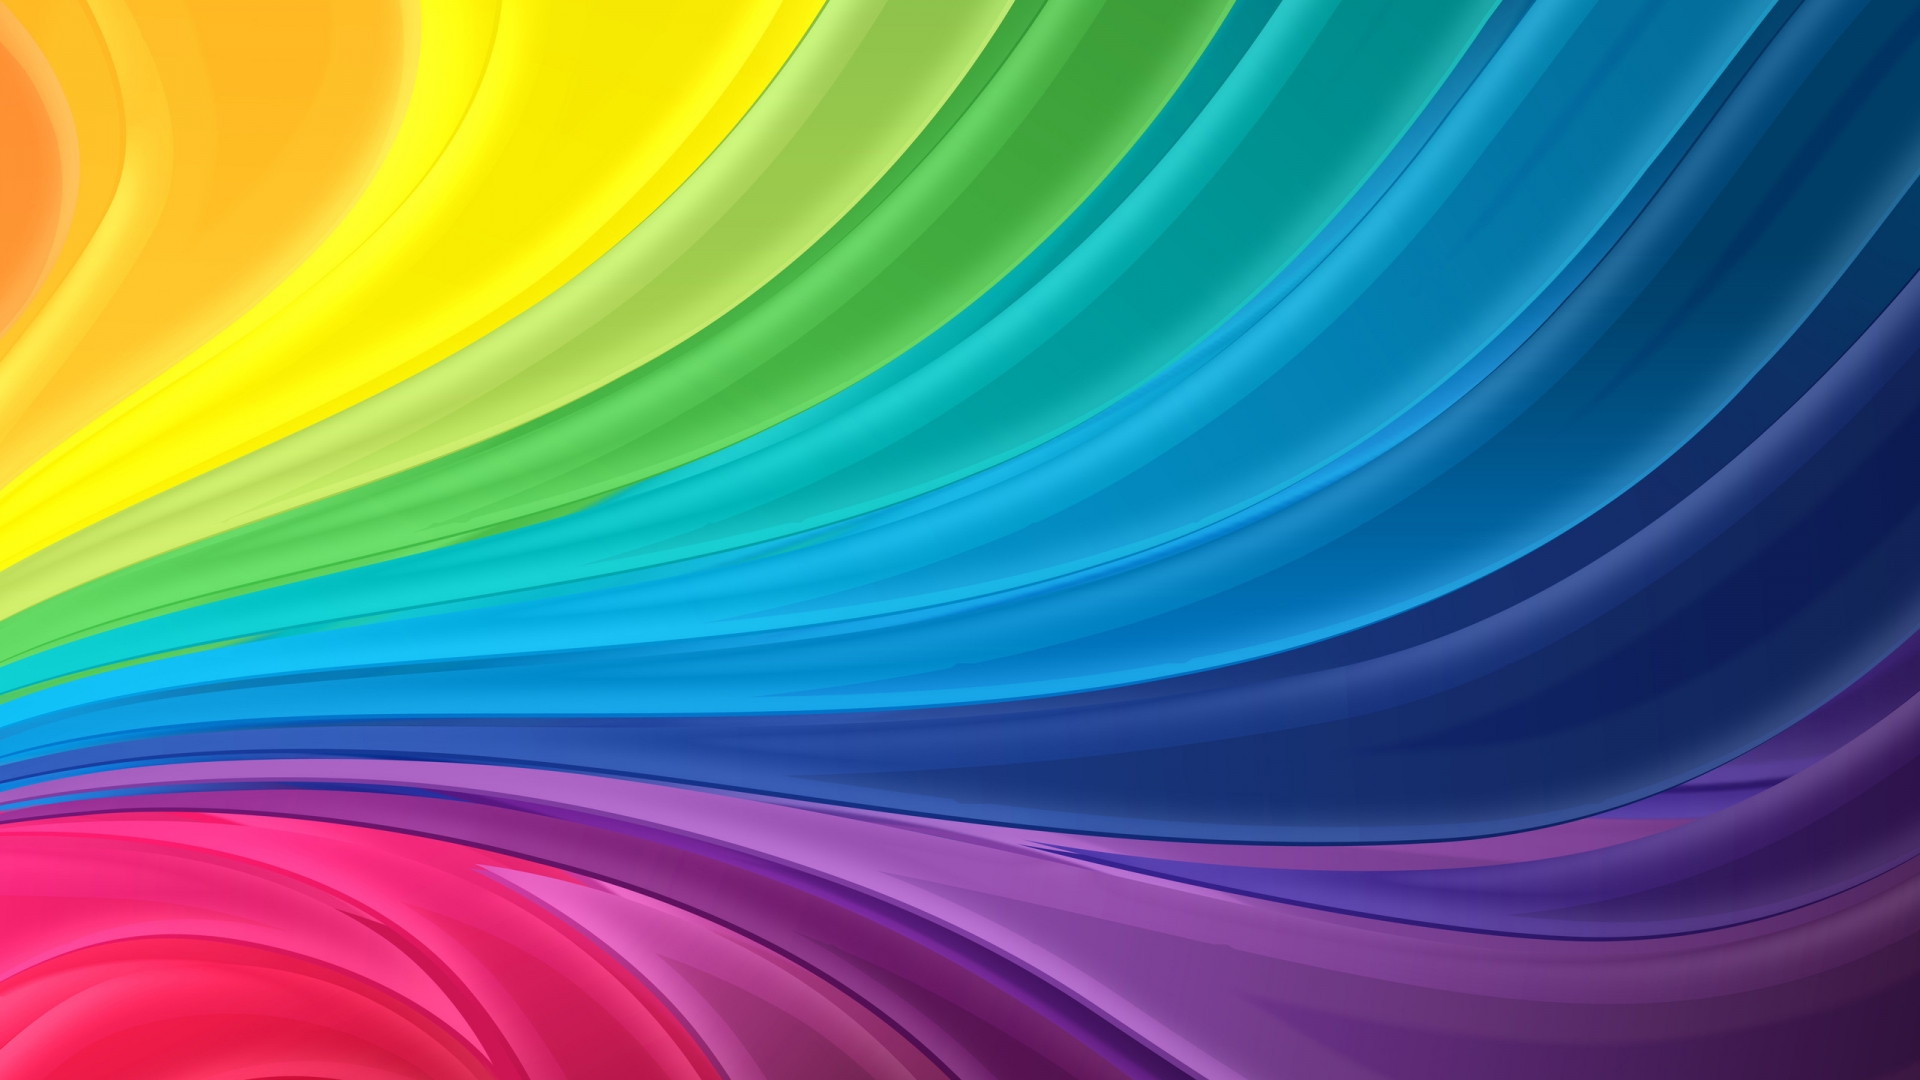 Neon Rainbow Images  Free Download on Freepik